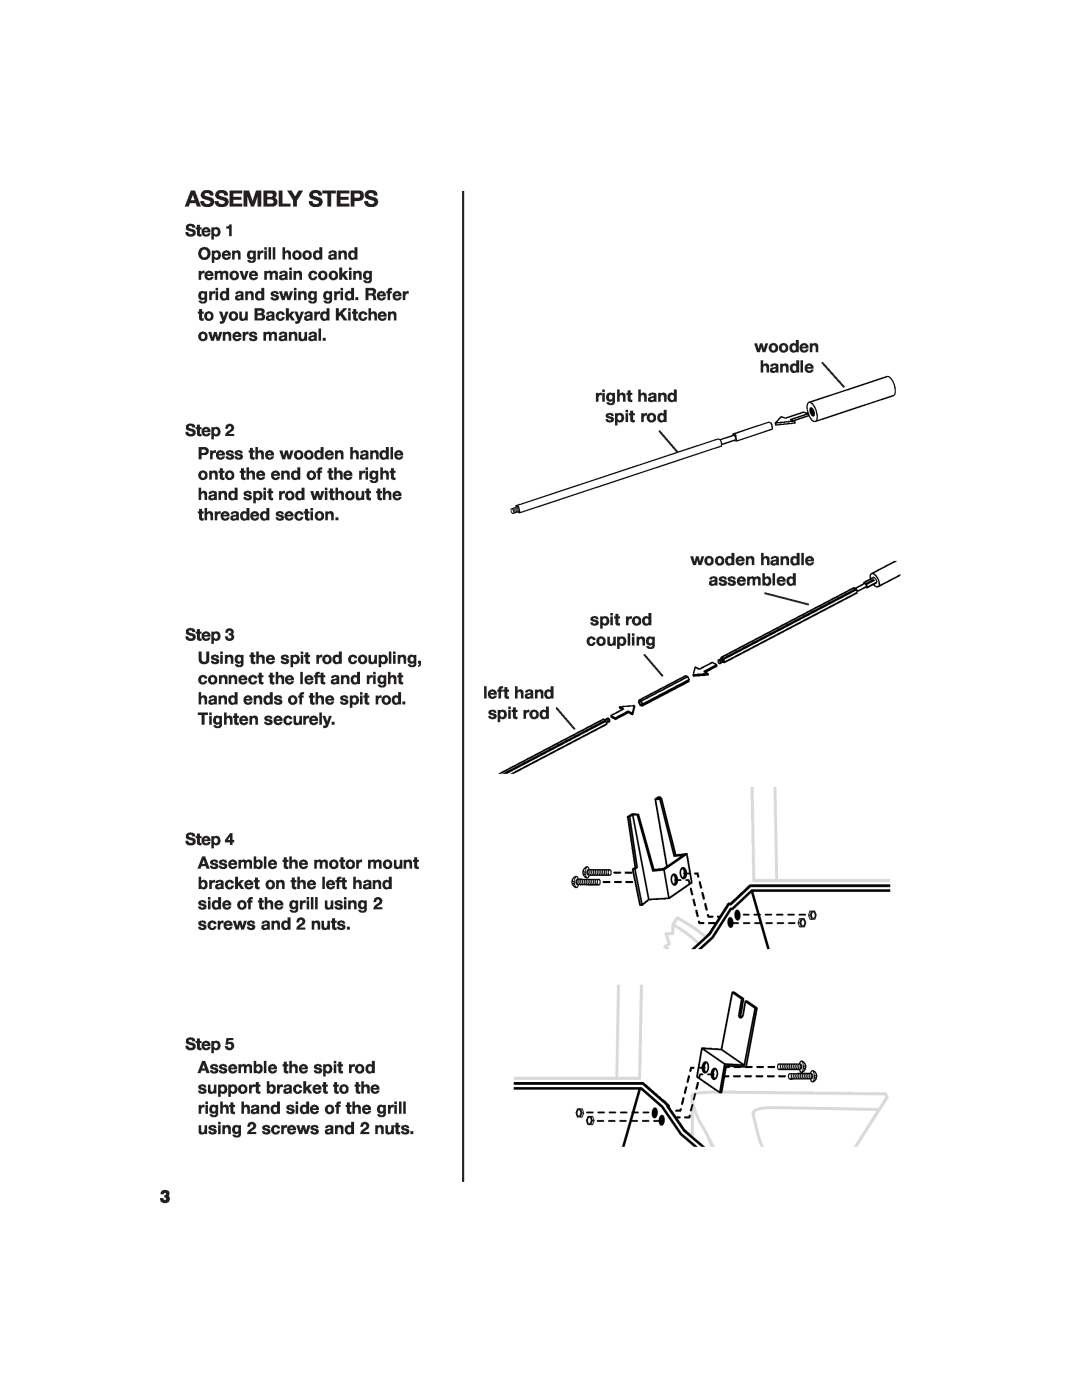 Brinkmann ROTISSERIE owner manual Assembly Steps 